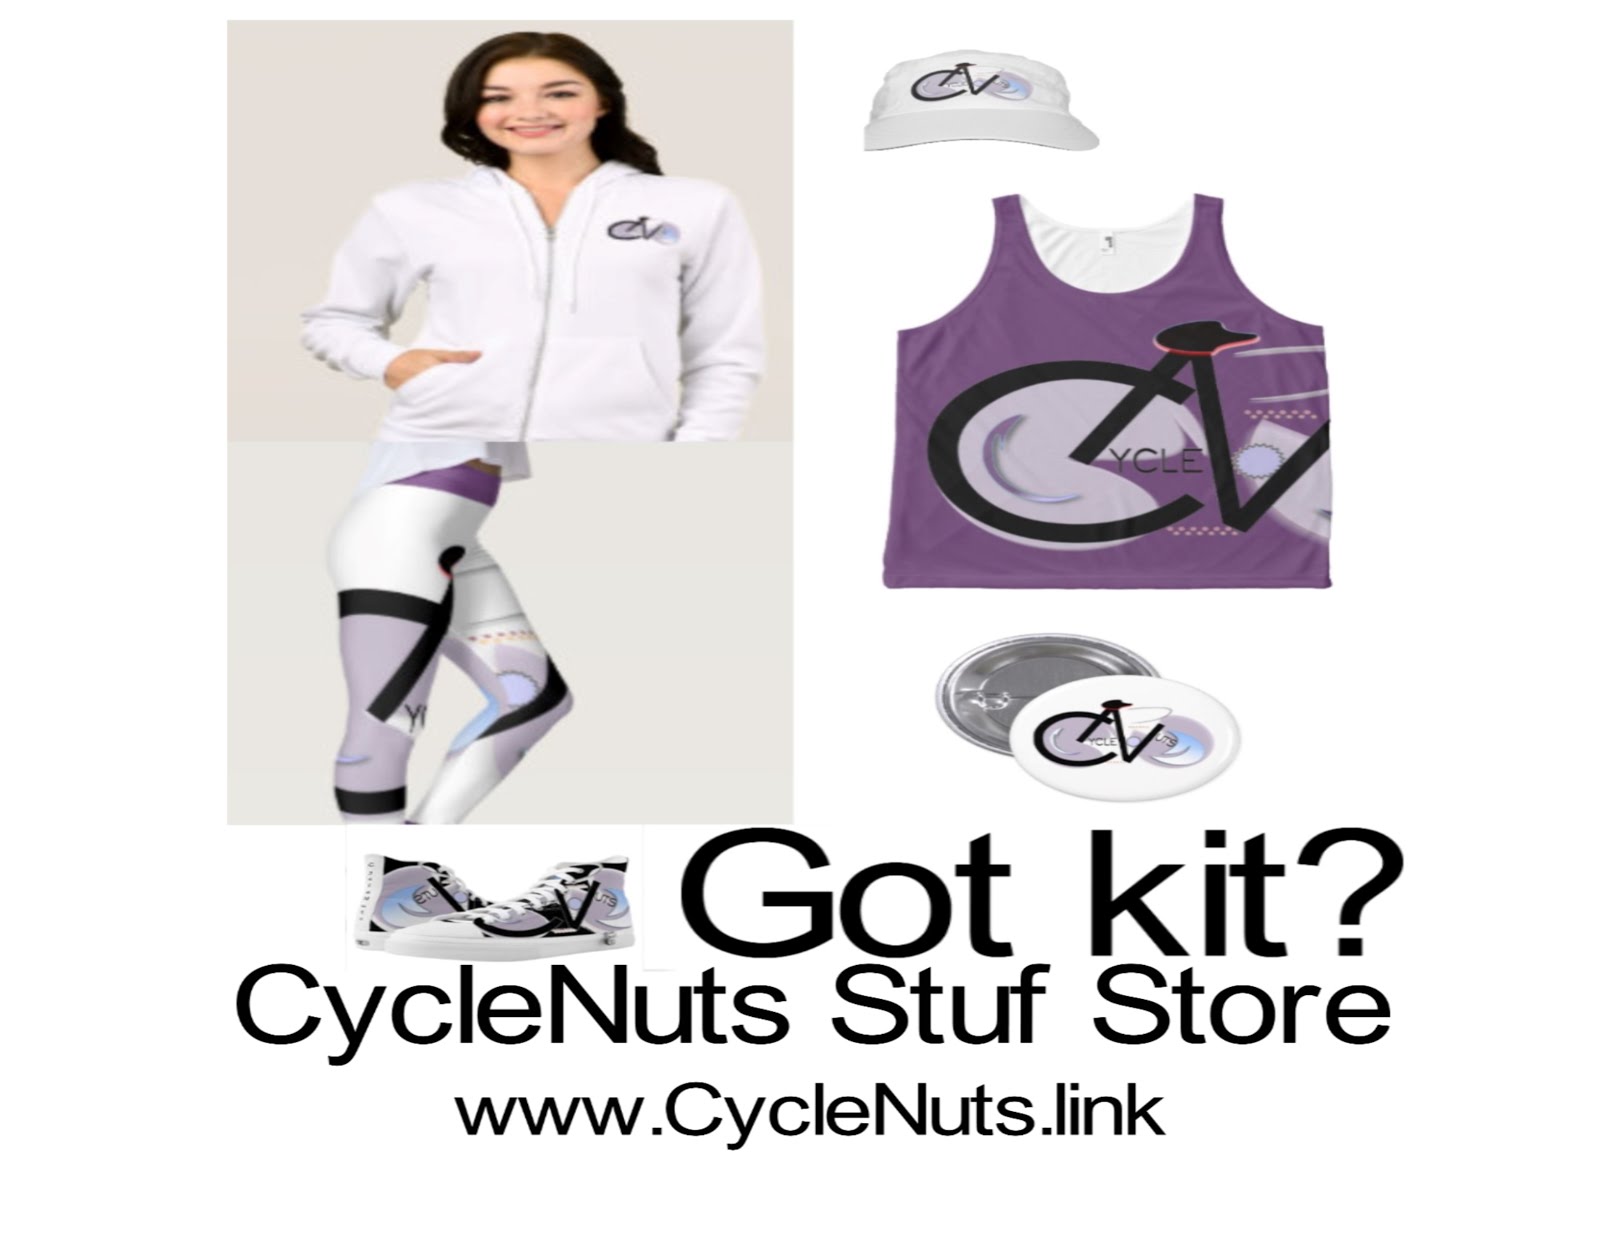 CycleNuts Stuf Store